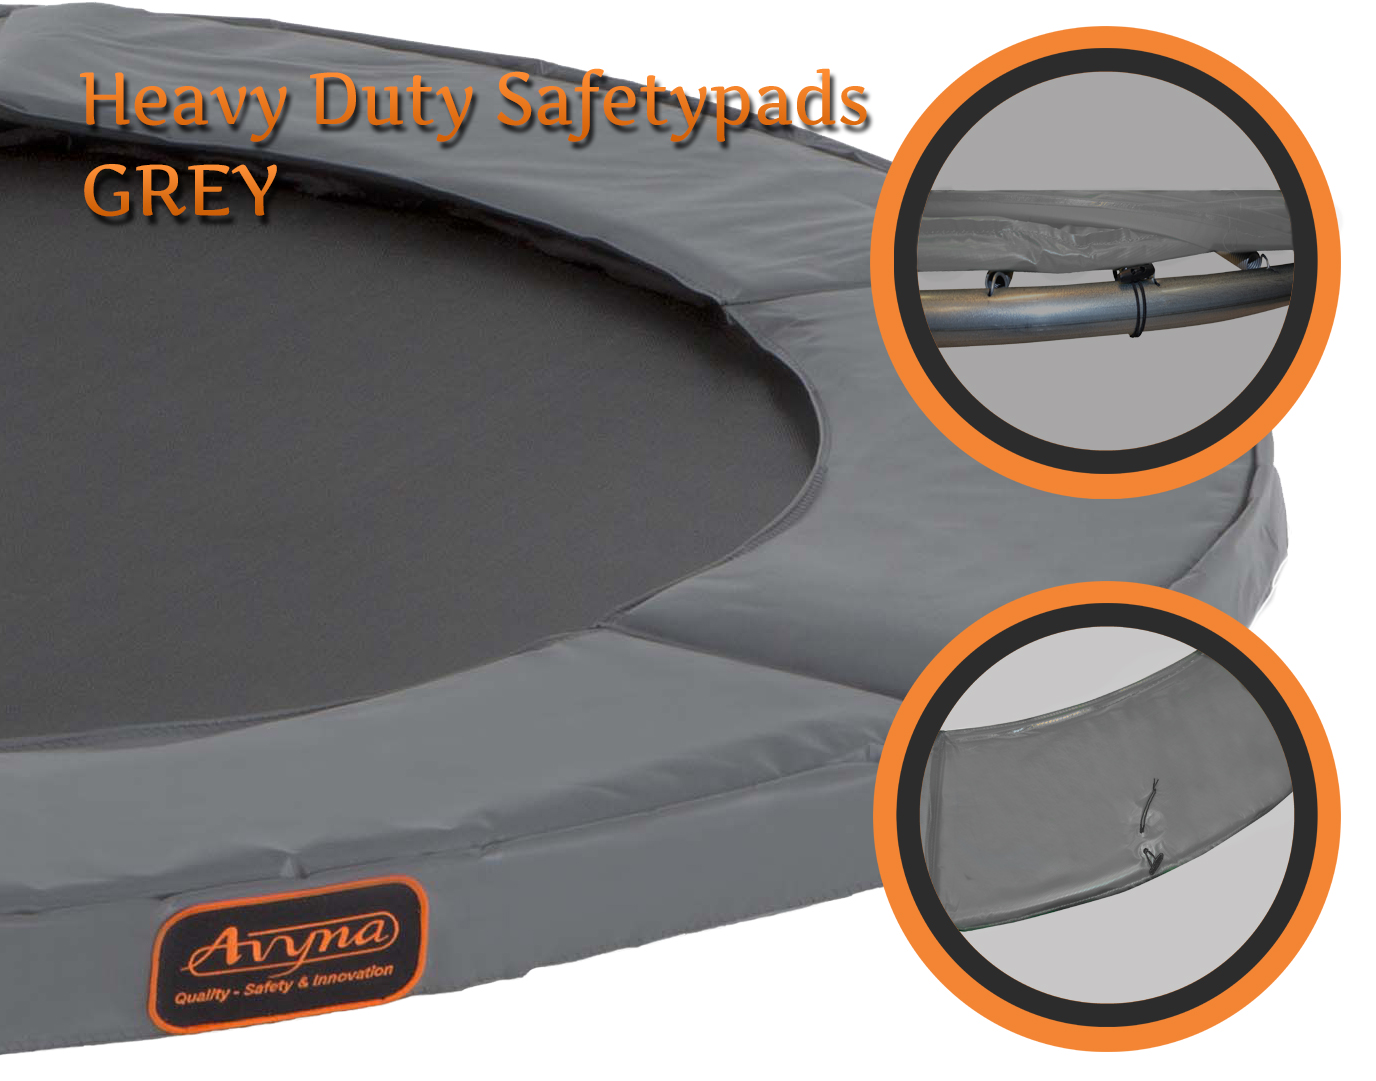 Universal Safety Pad 09ft Heavy Duty Grey